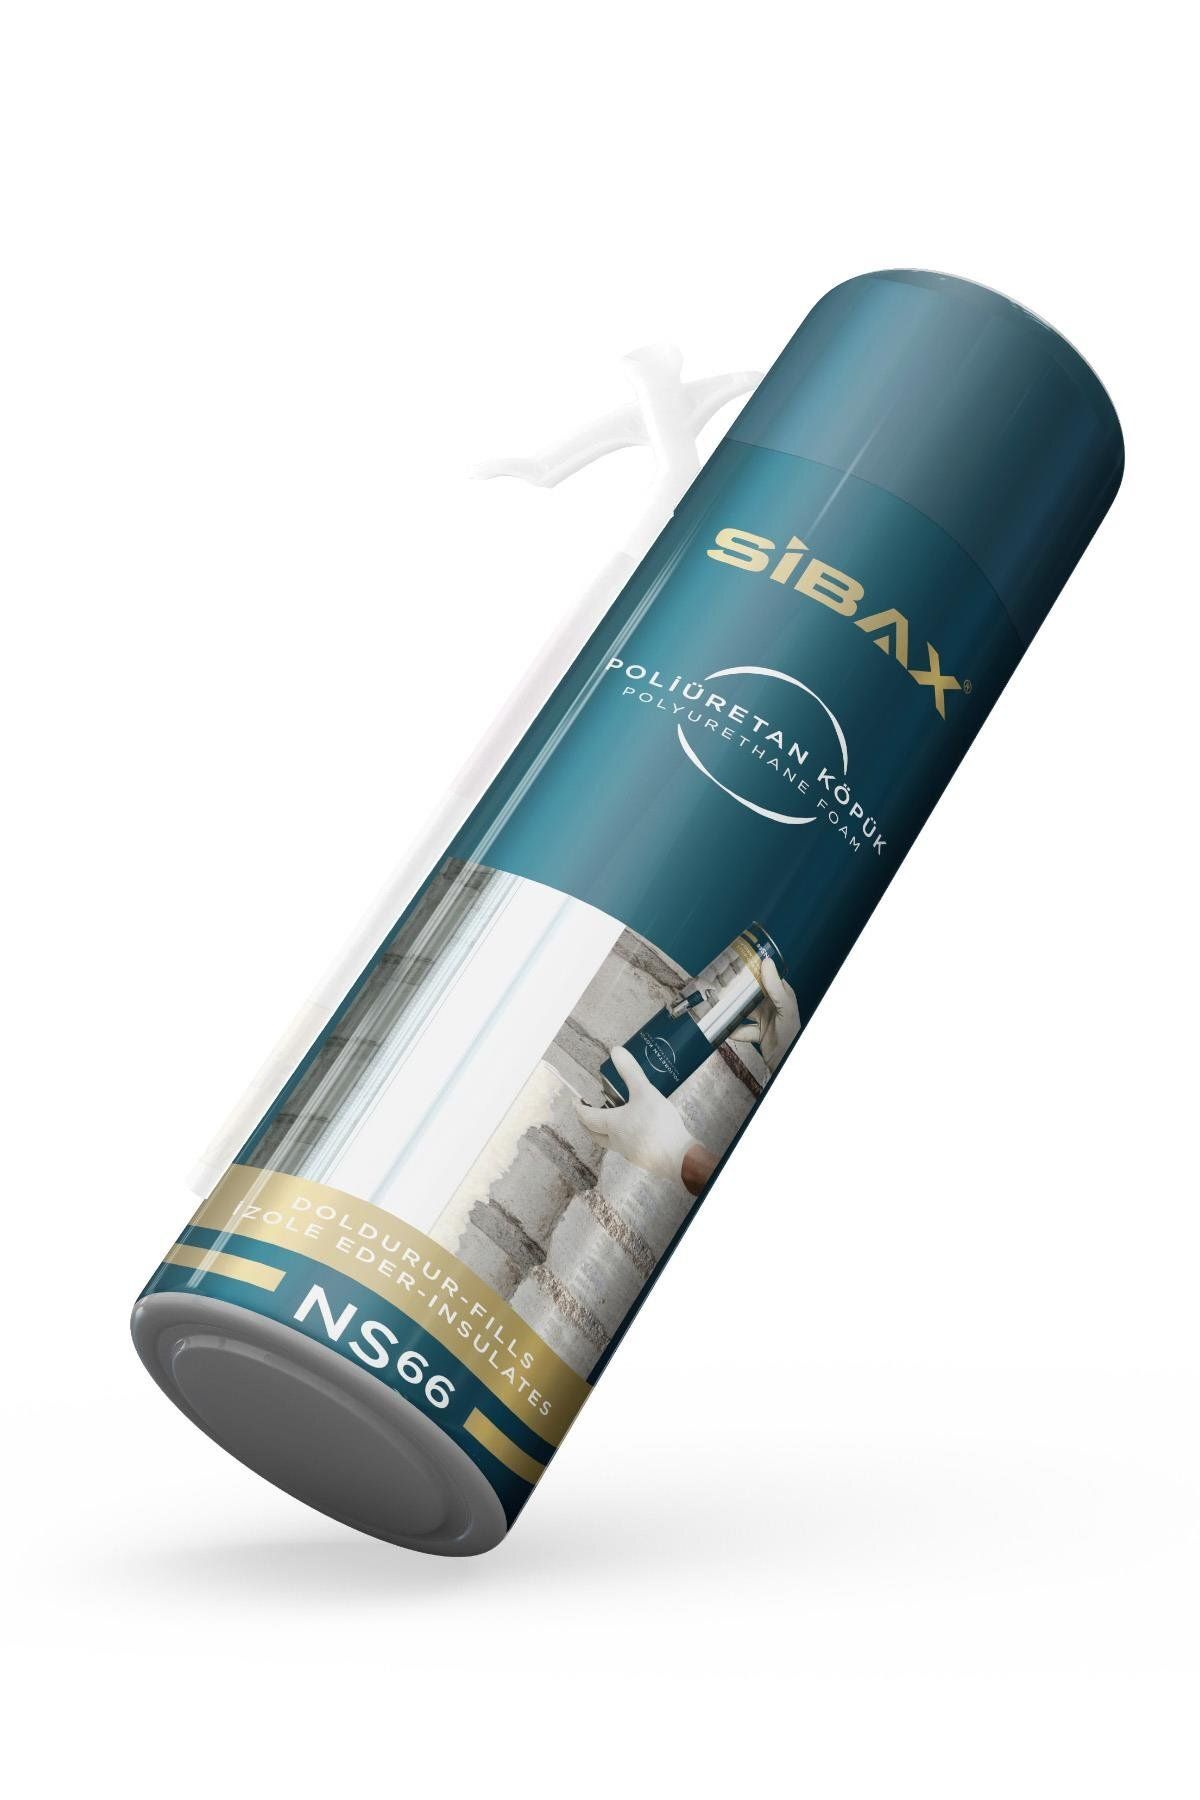 Sibax Ns66 Poliüretan Köpük 600 gr Isı Ve Ses Yalıtımında Güçlü